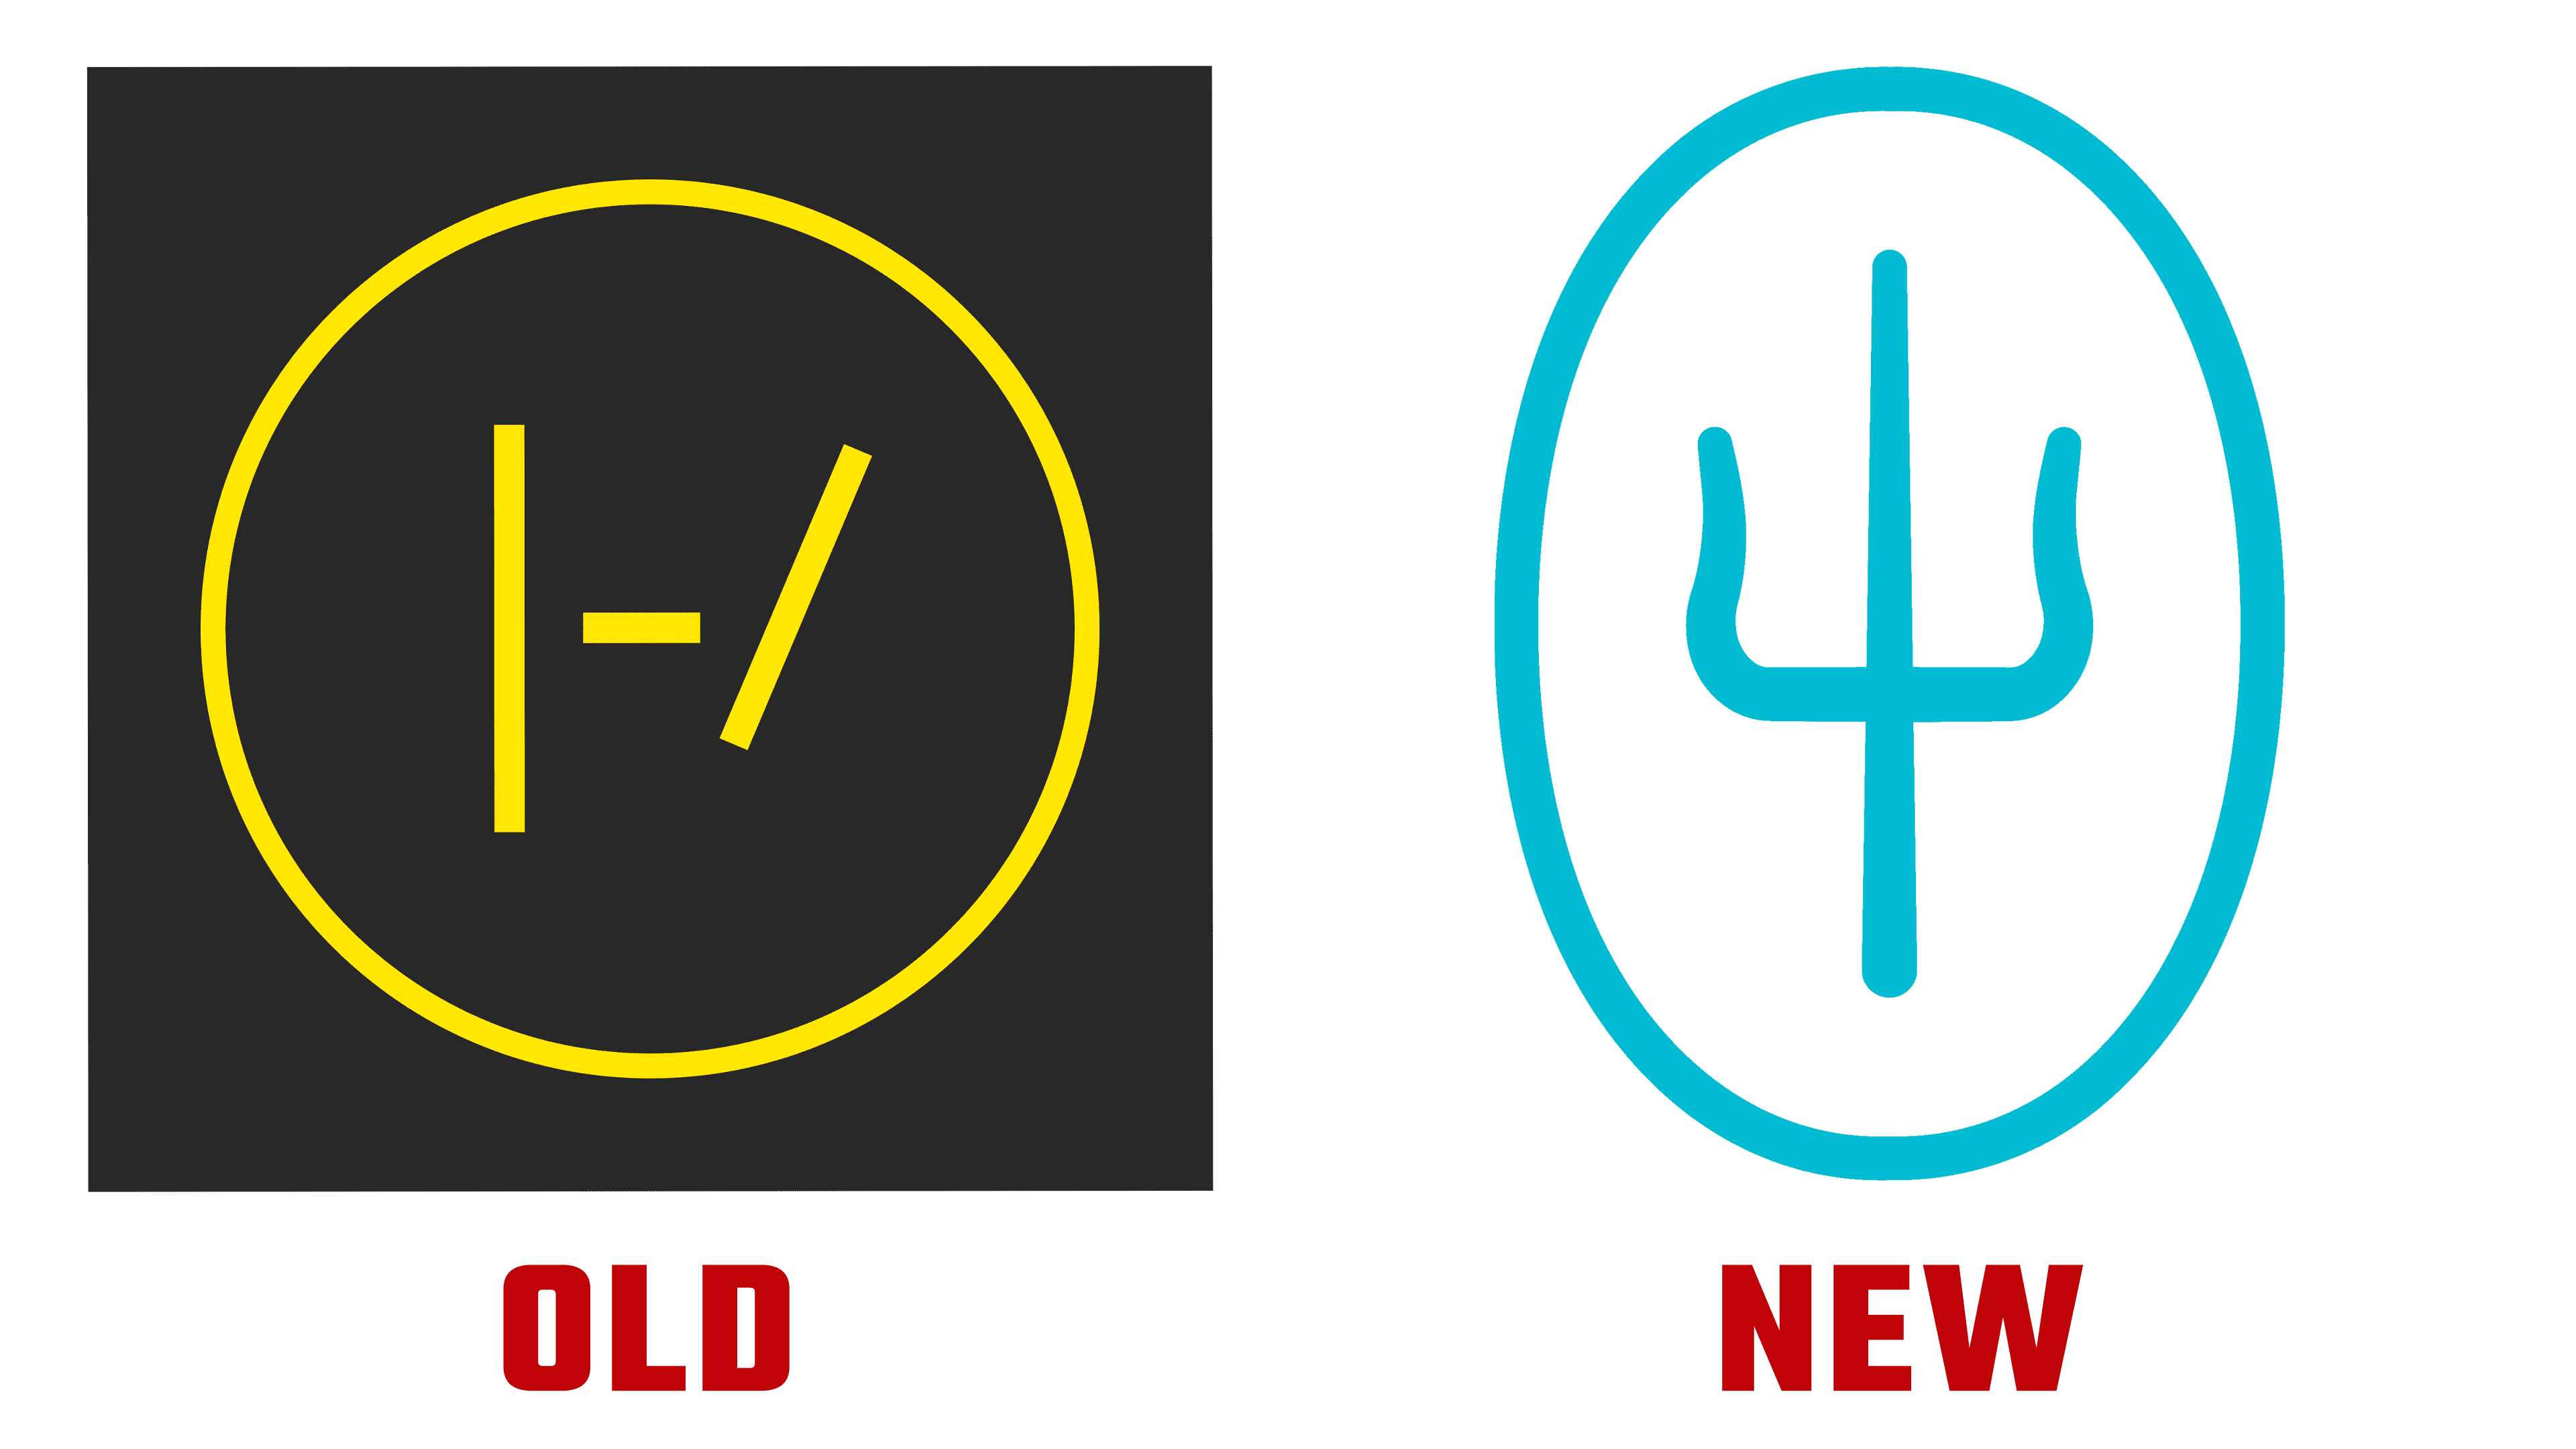 TwentyOne Pilots announces new album and reveals logo